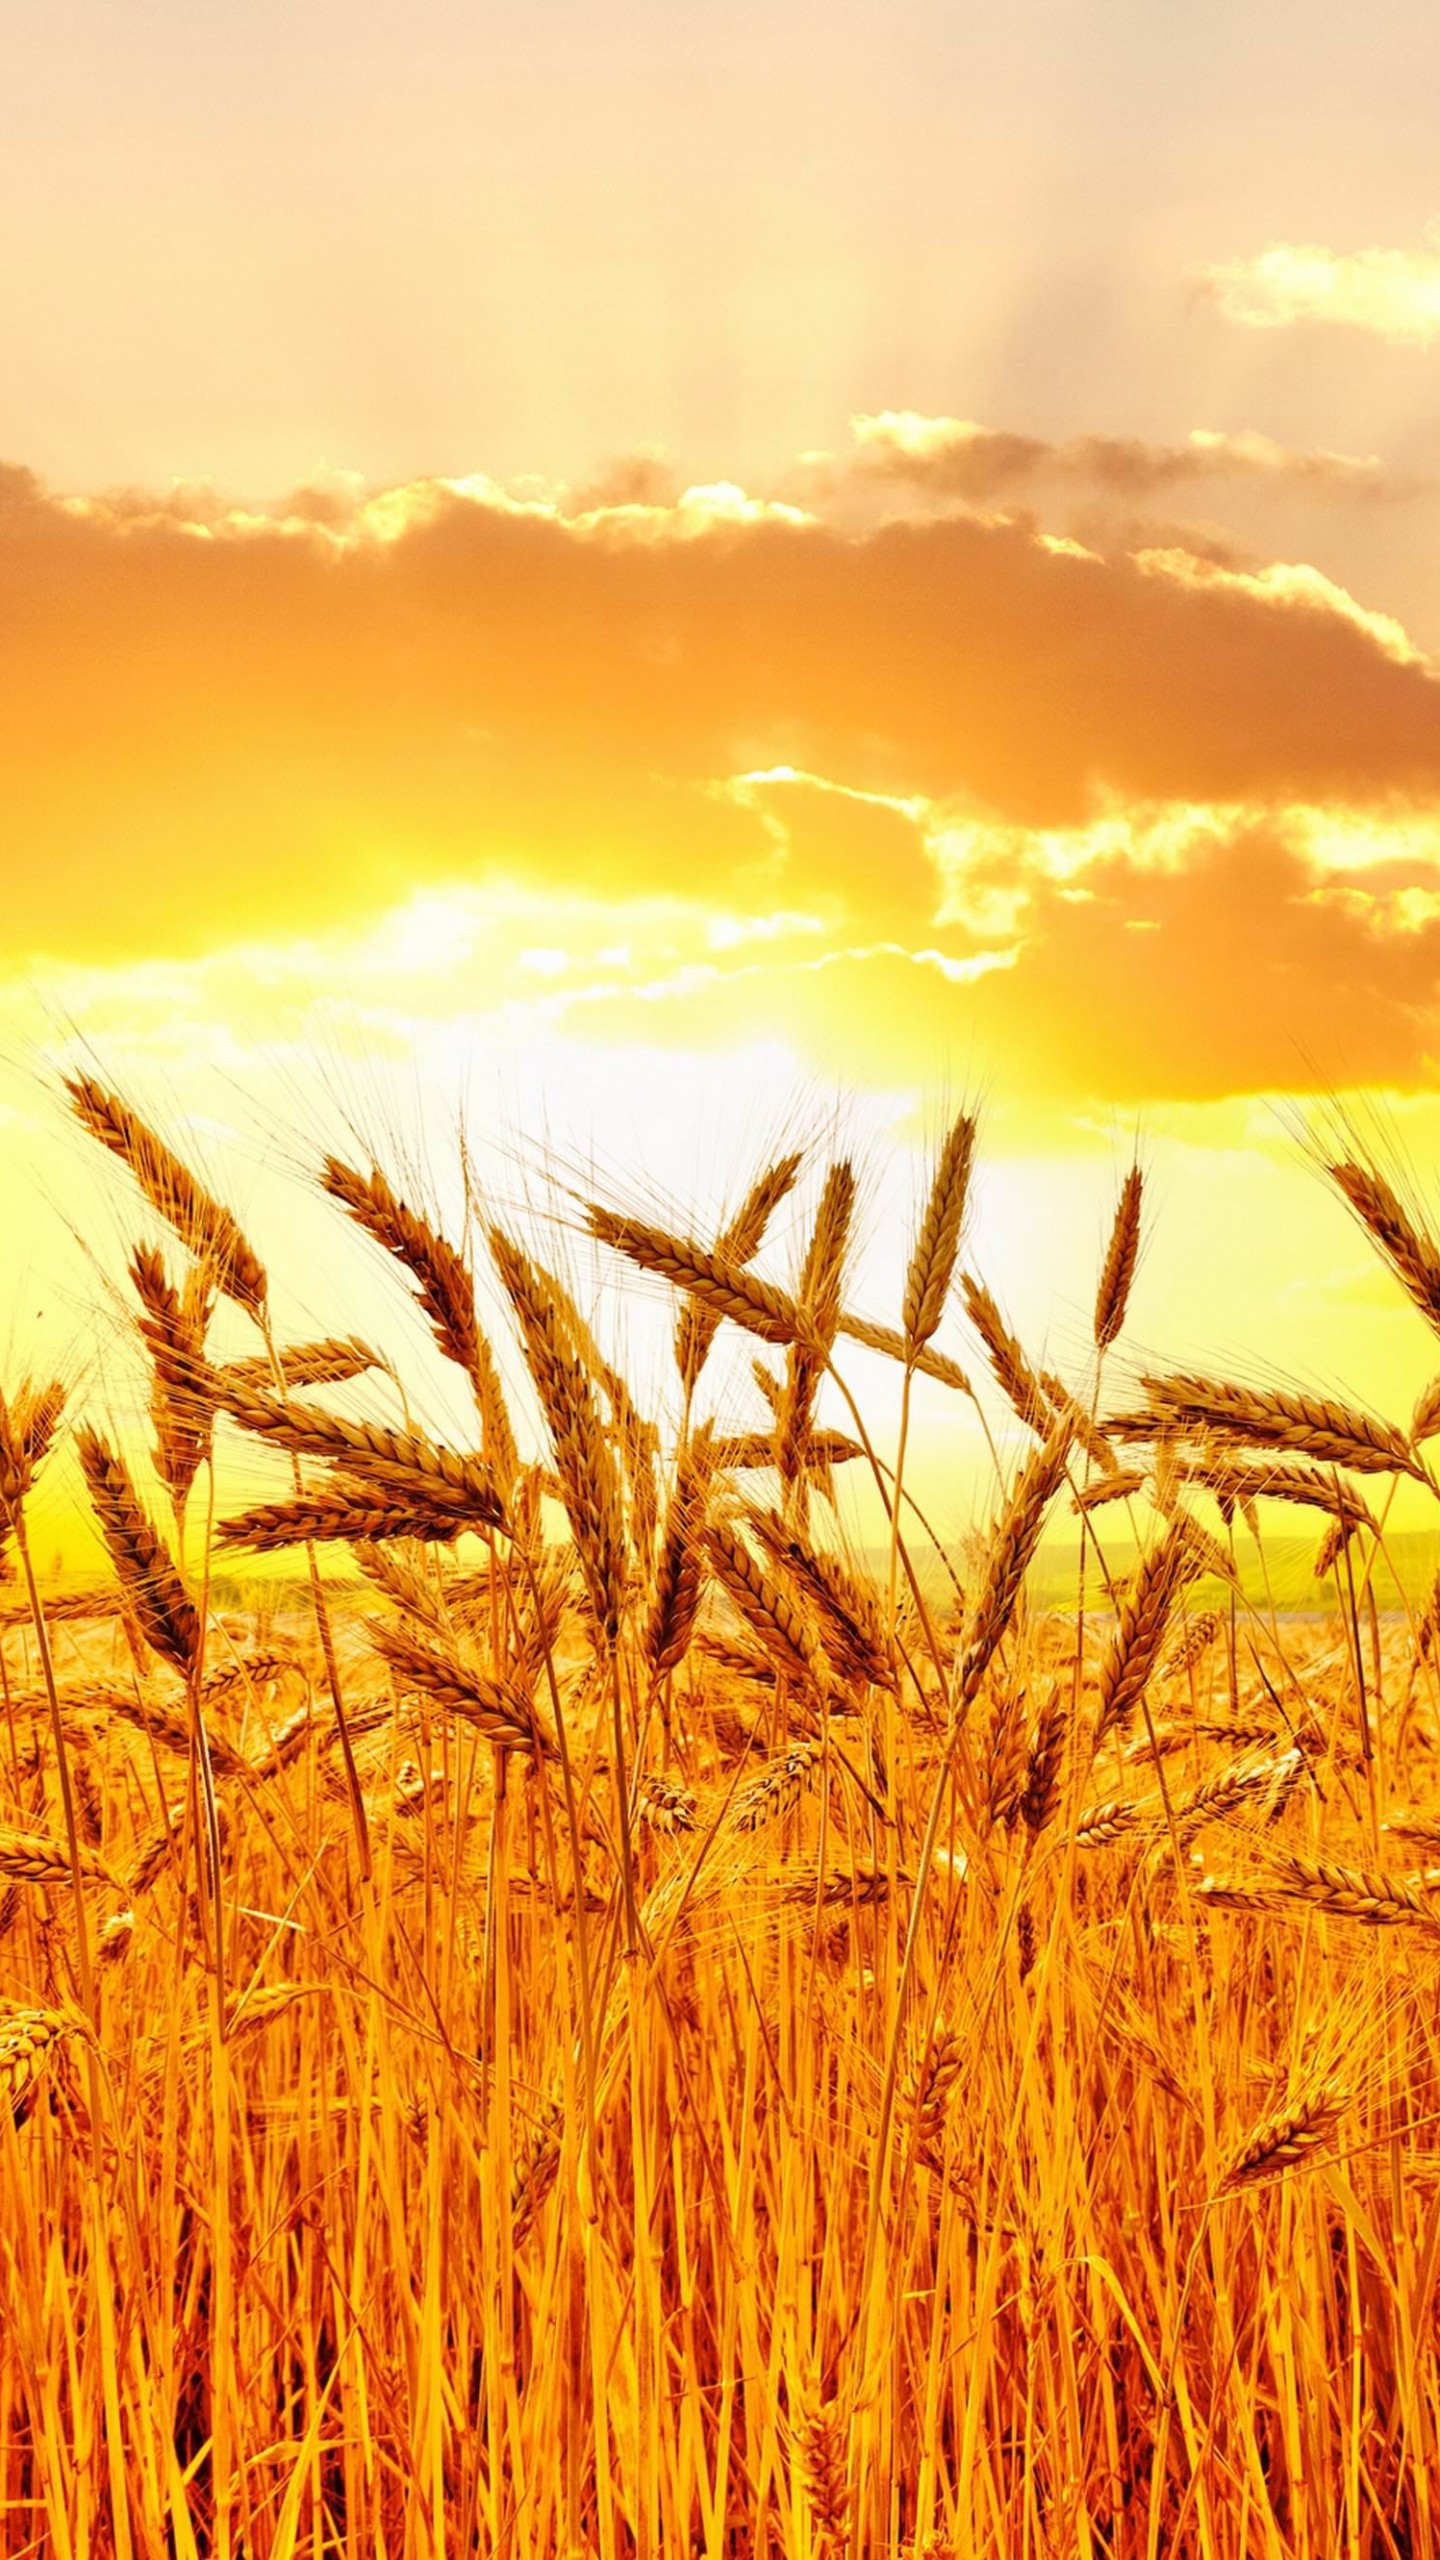 Golden Wheat Field At Sunset Wallpaper for LG G3